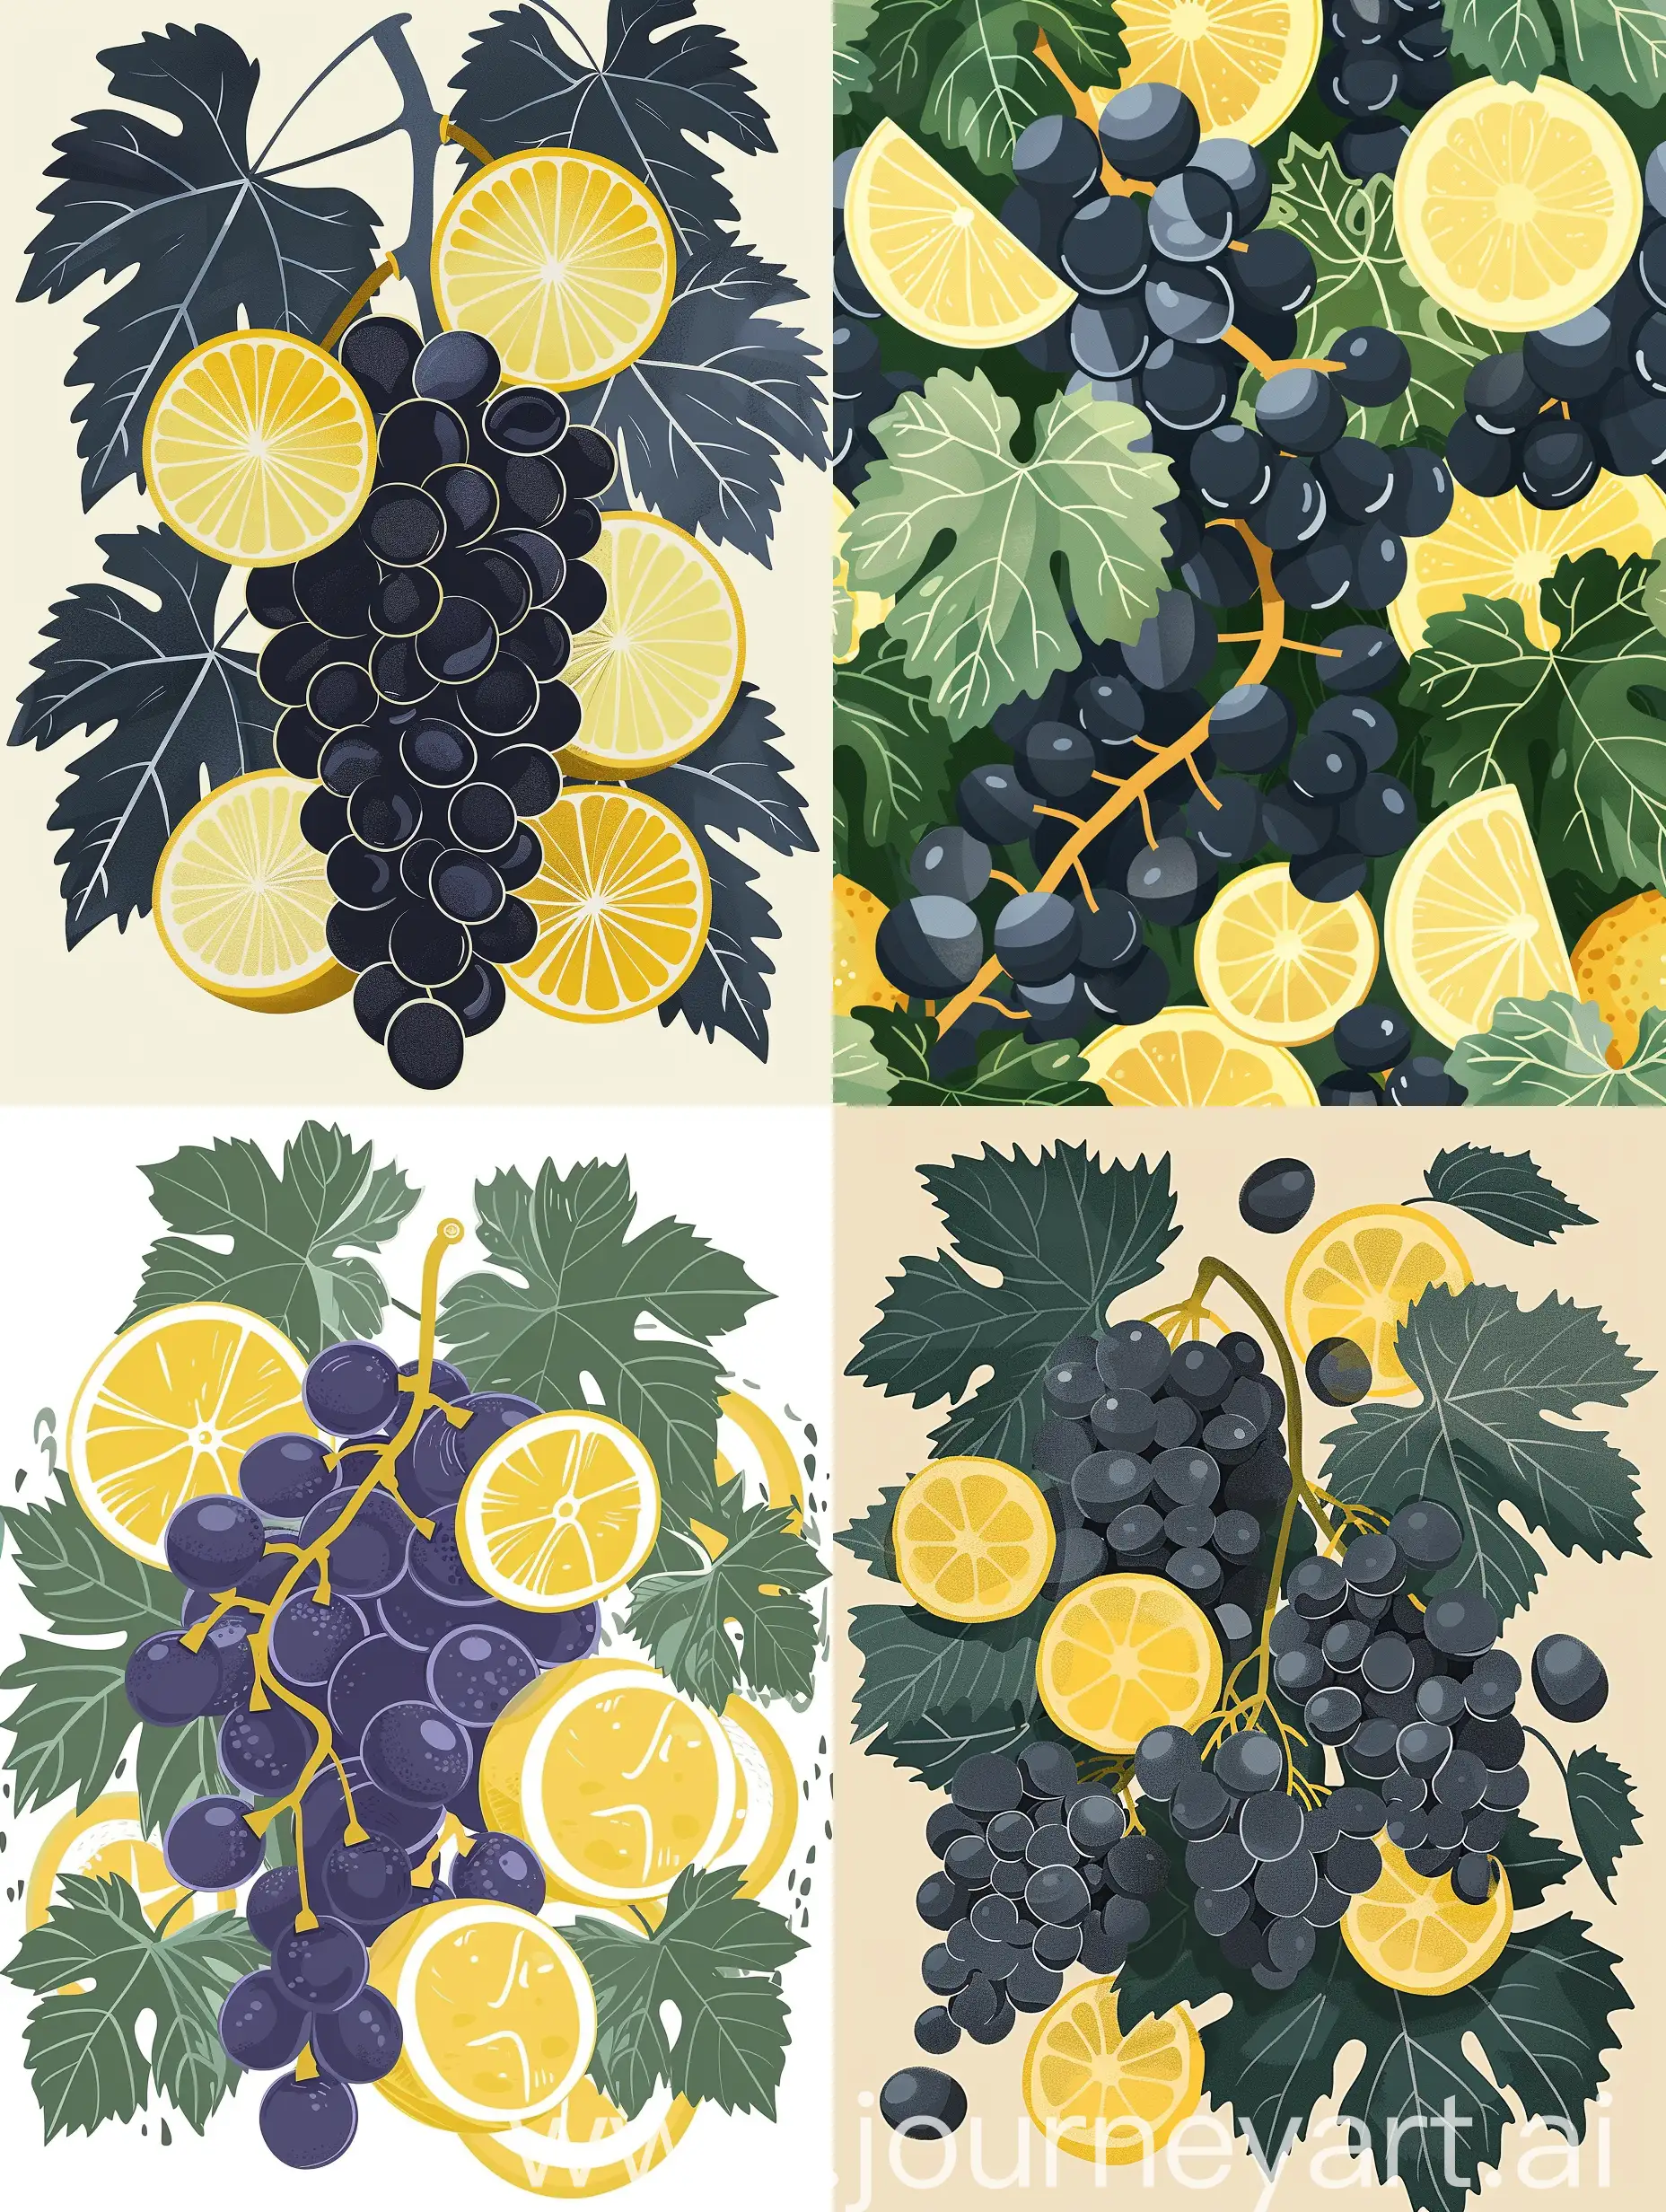 ornament of grape leaves and lemon slices, flat illustration, comic